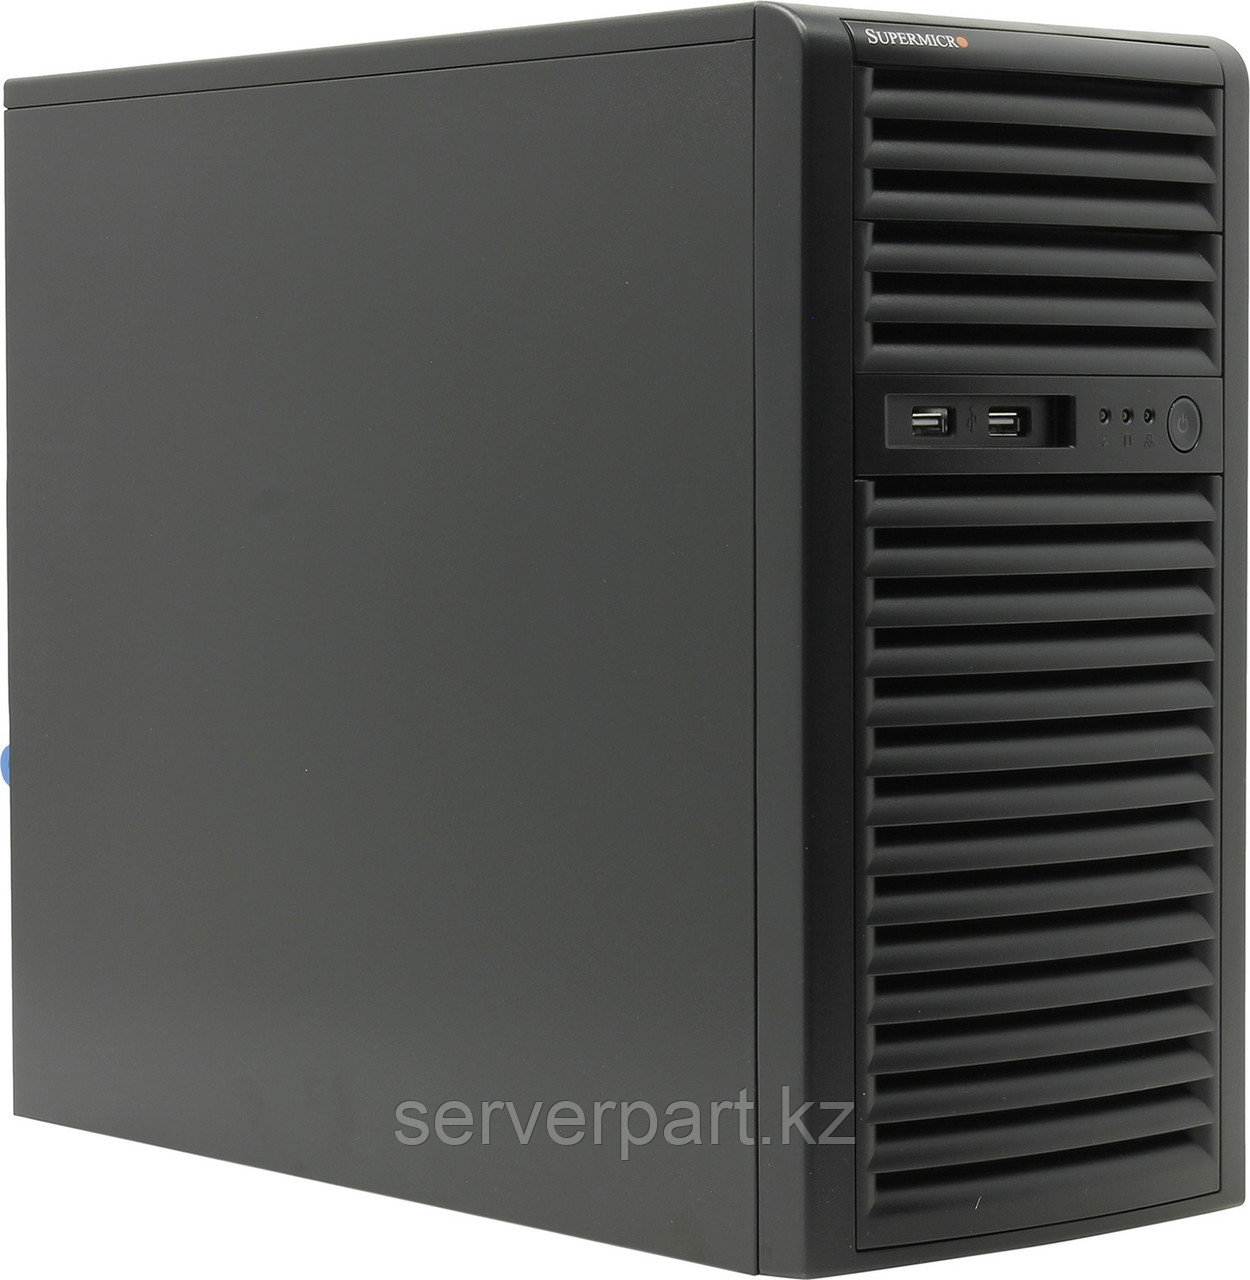 Сервер Supermicro 732-500B\X10DRL-F Tower 4LFF/1х4-core Intel Xeon E5-2637v3 3.5GHz/no RAM/no HDD